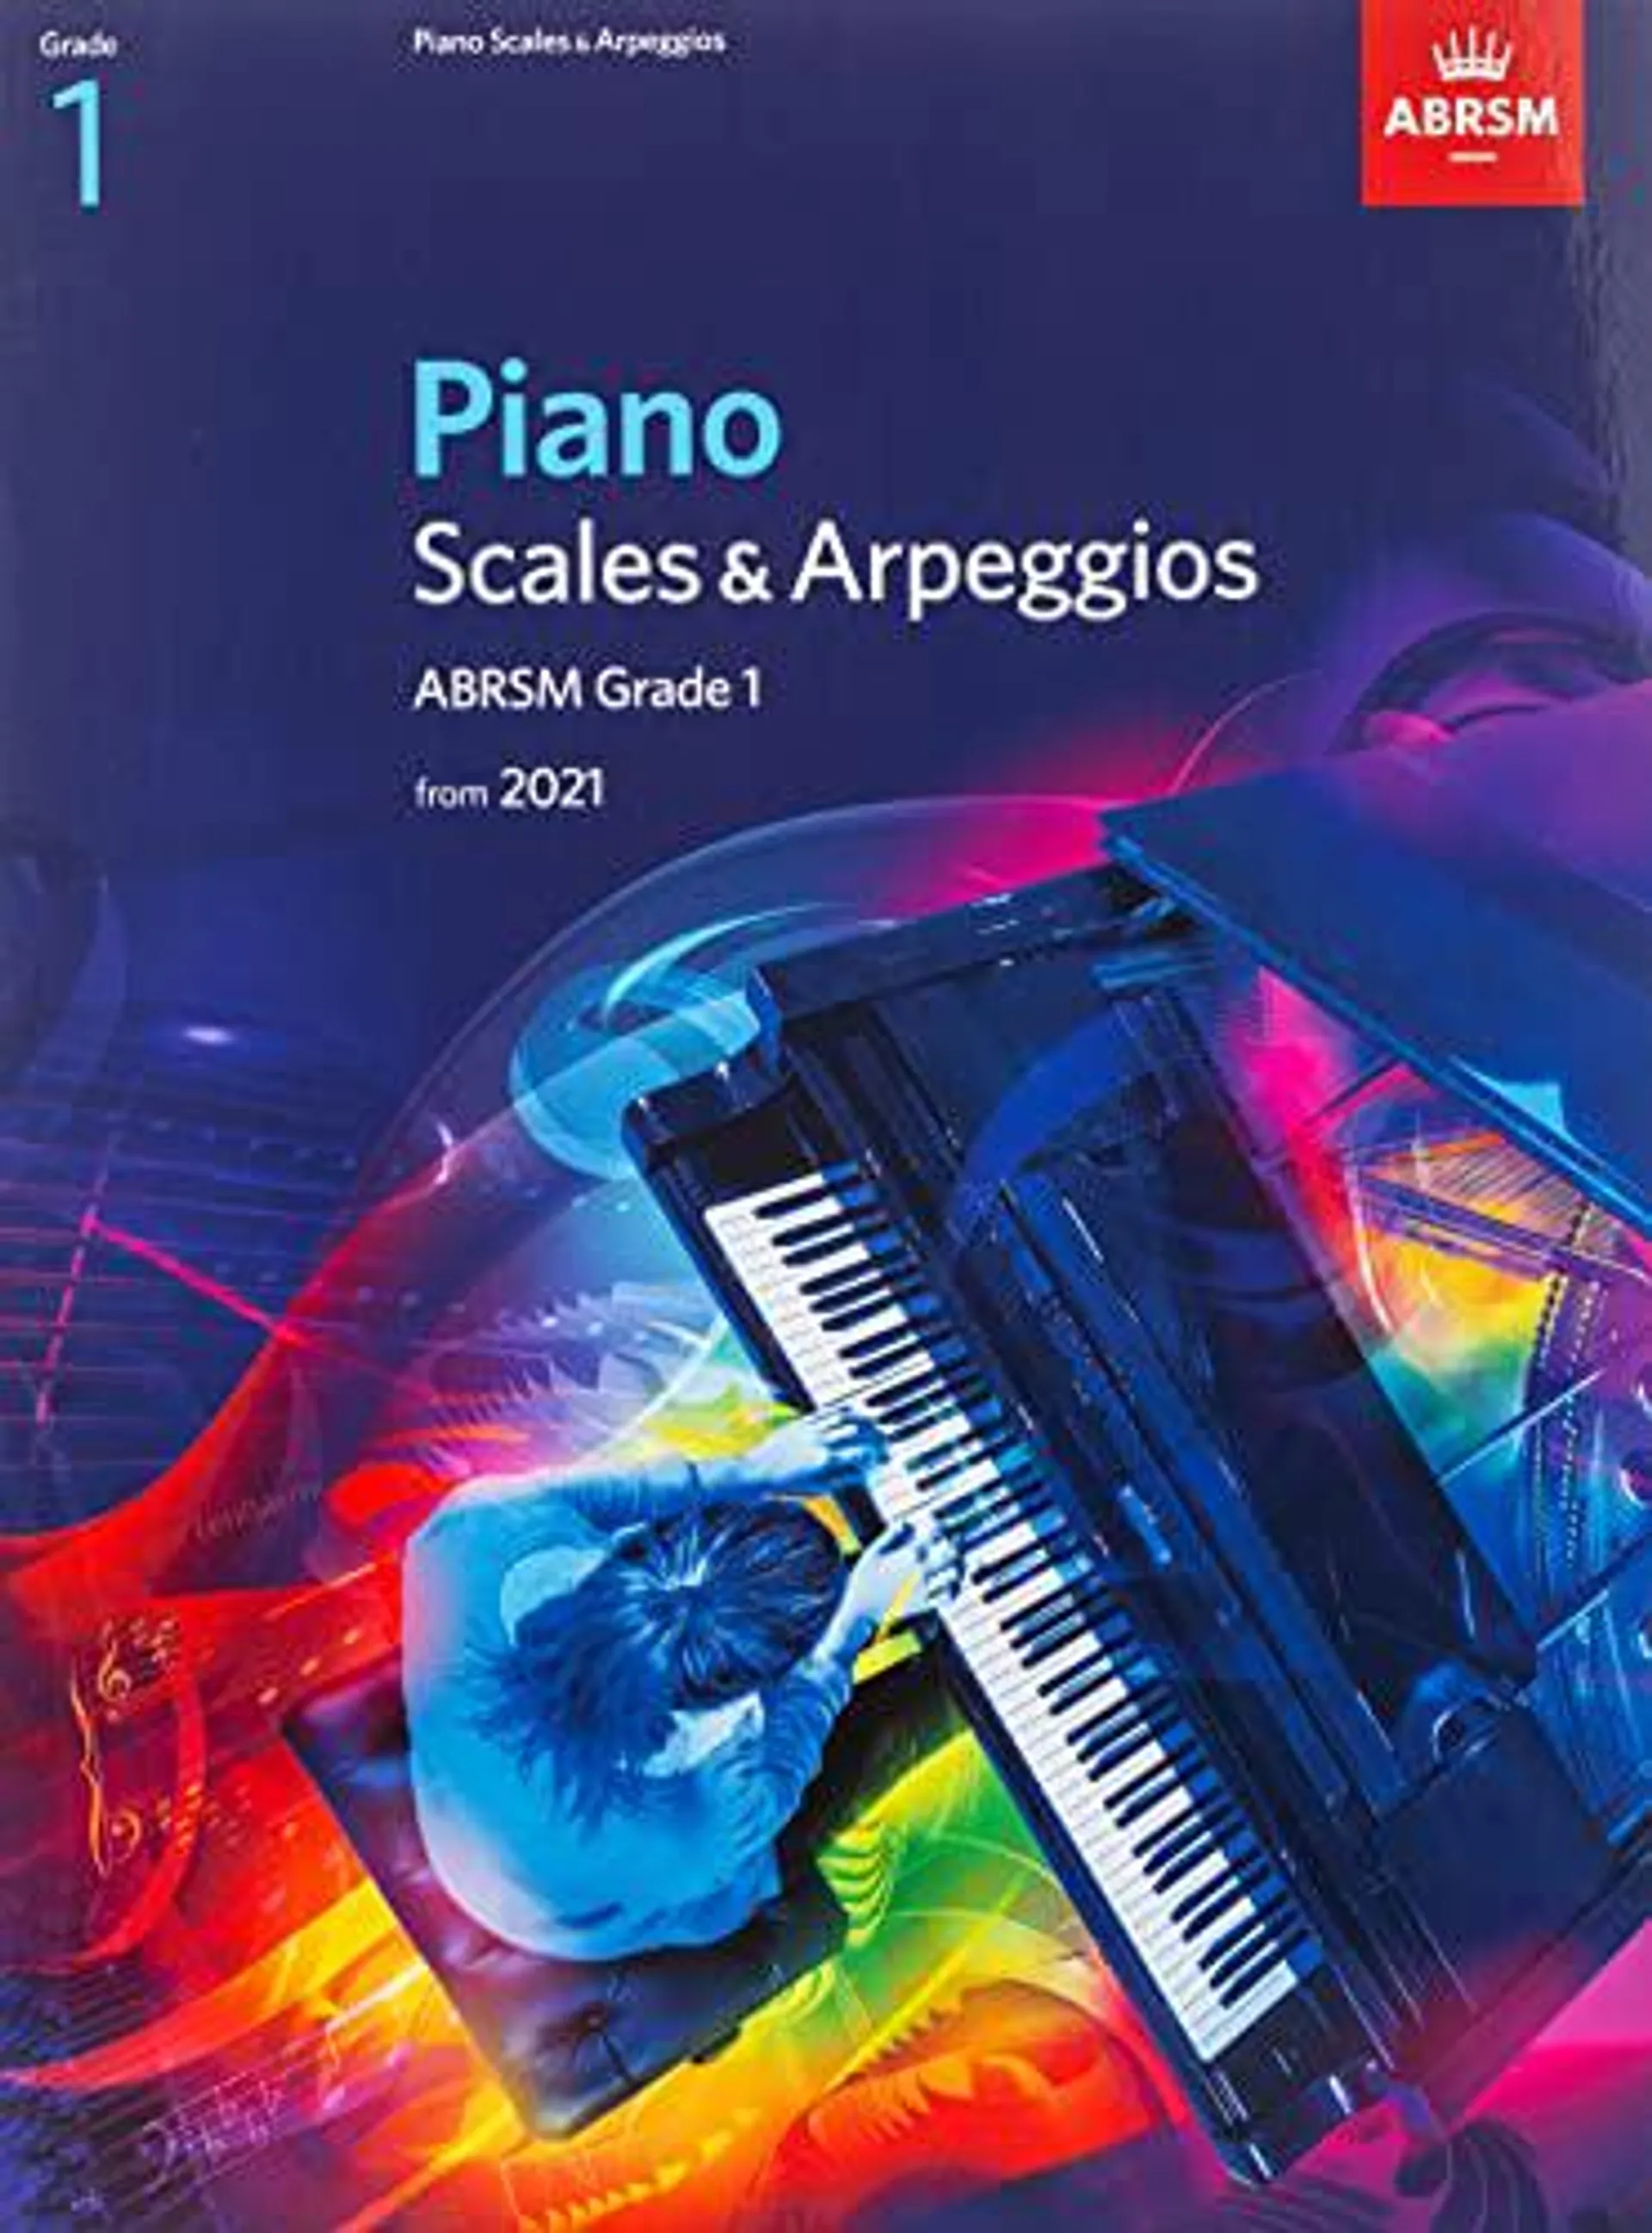 Piano Scales & Arpeggios, ABRSM Grade 1 by ABRSM